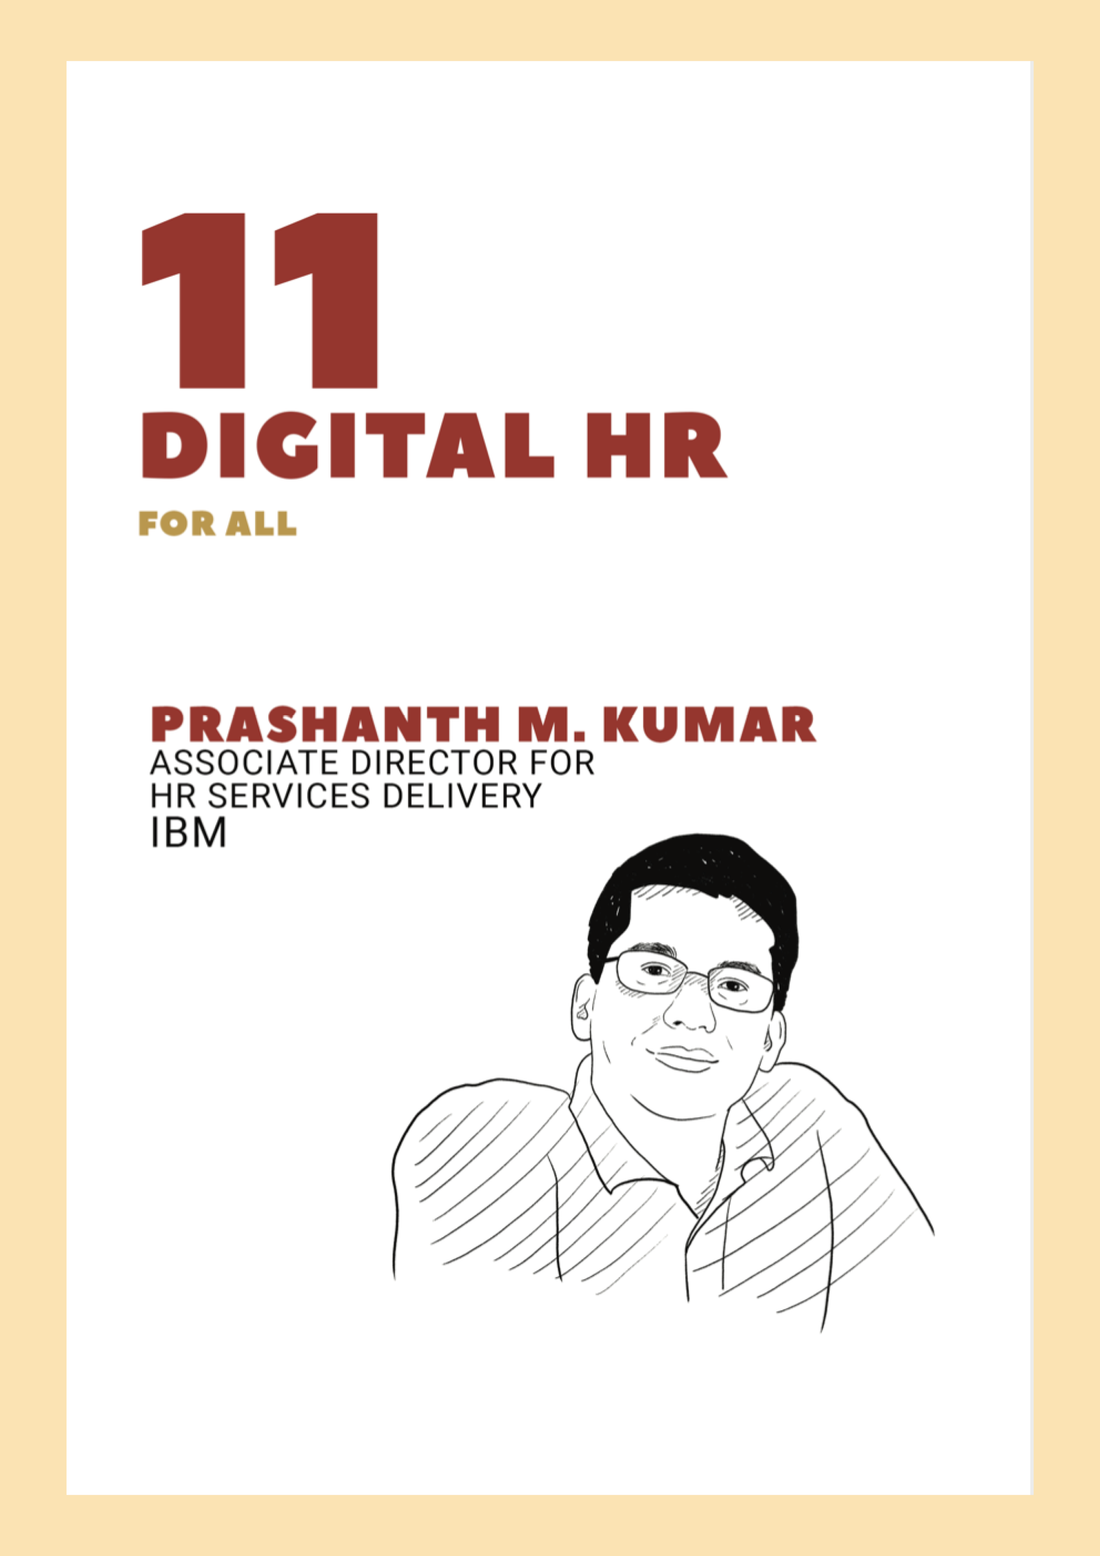 Digital HR for All